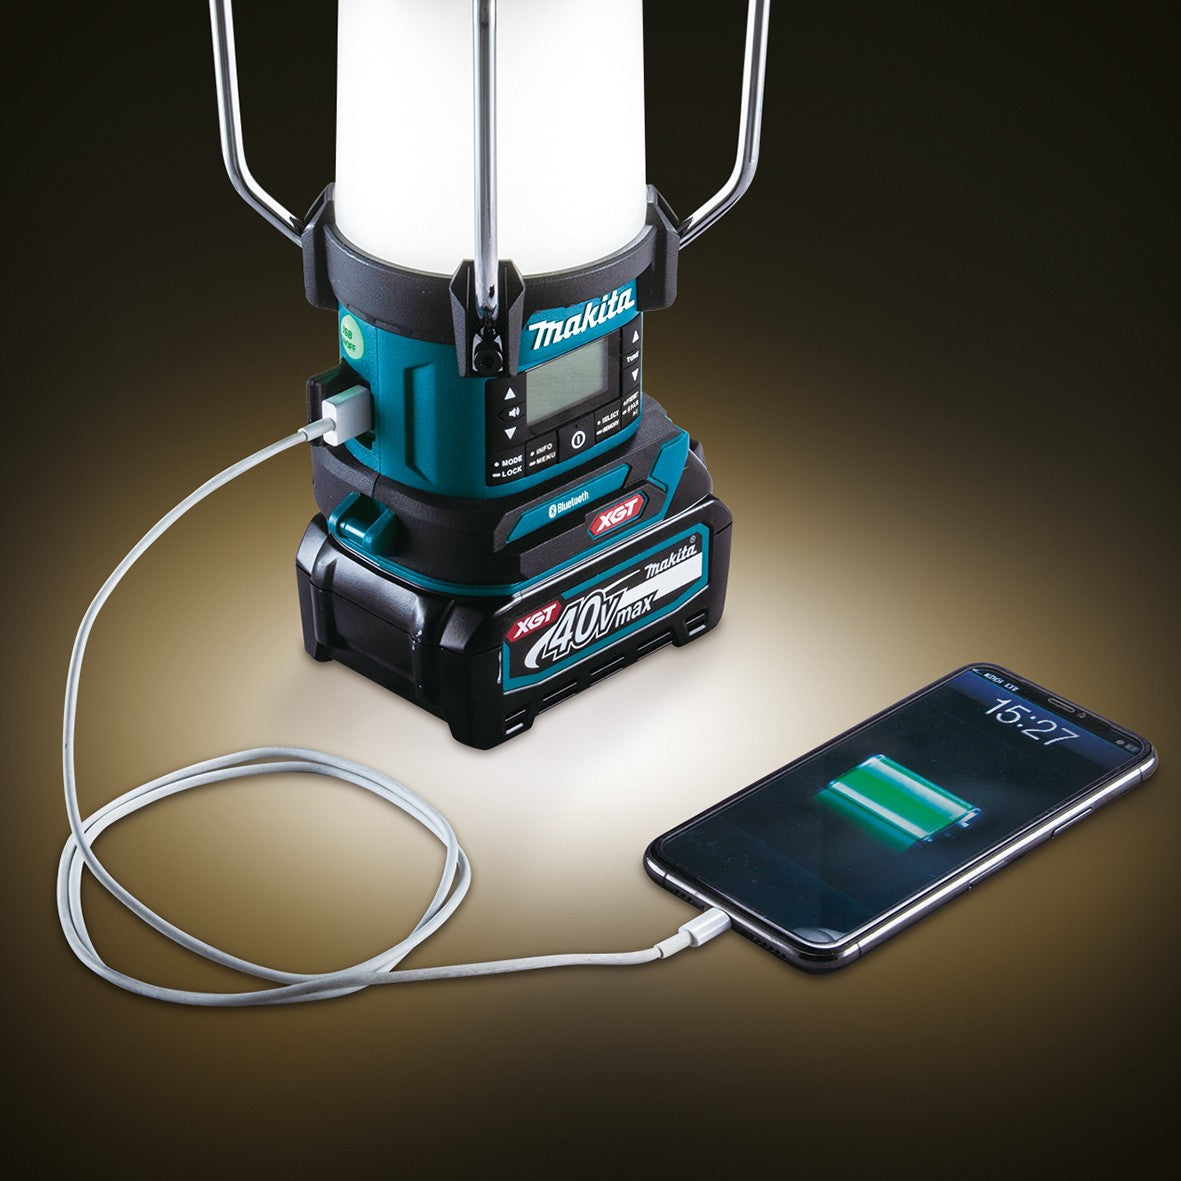 40V Max Bluetooth Digital Radio Lantern Bare (Tool Only) MR009GZ by Makita